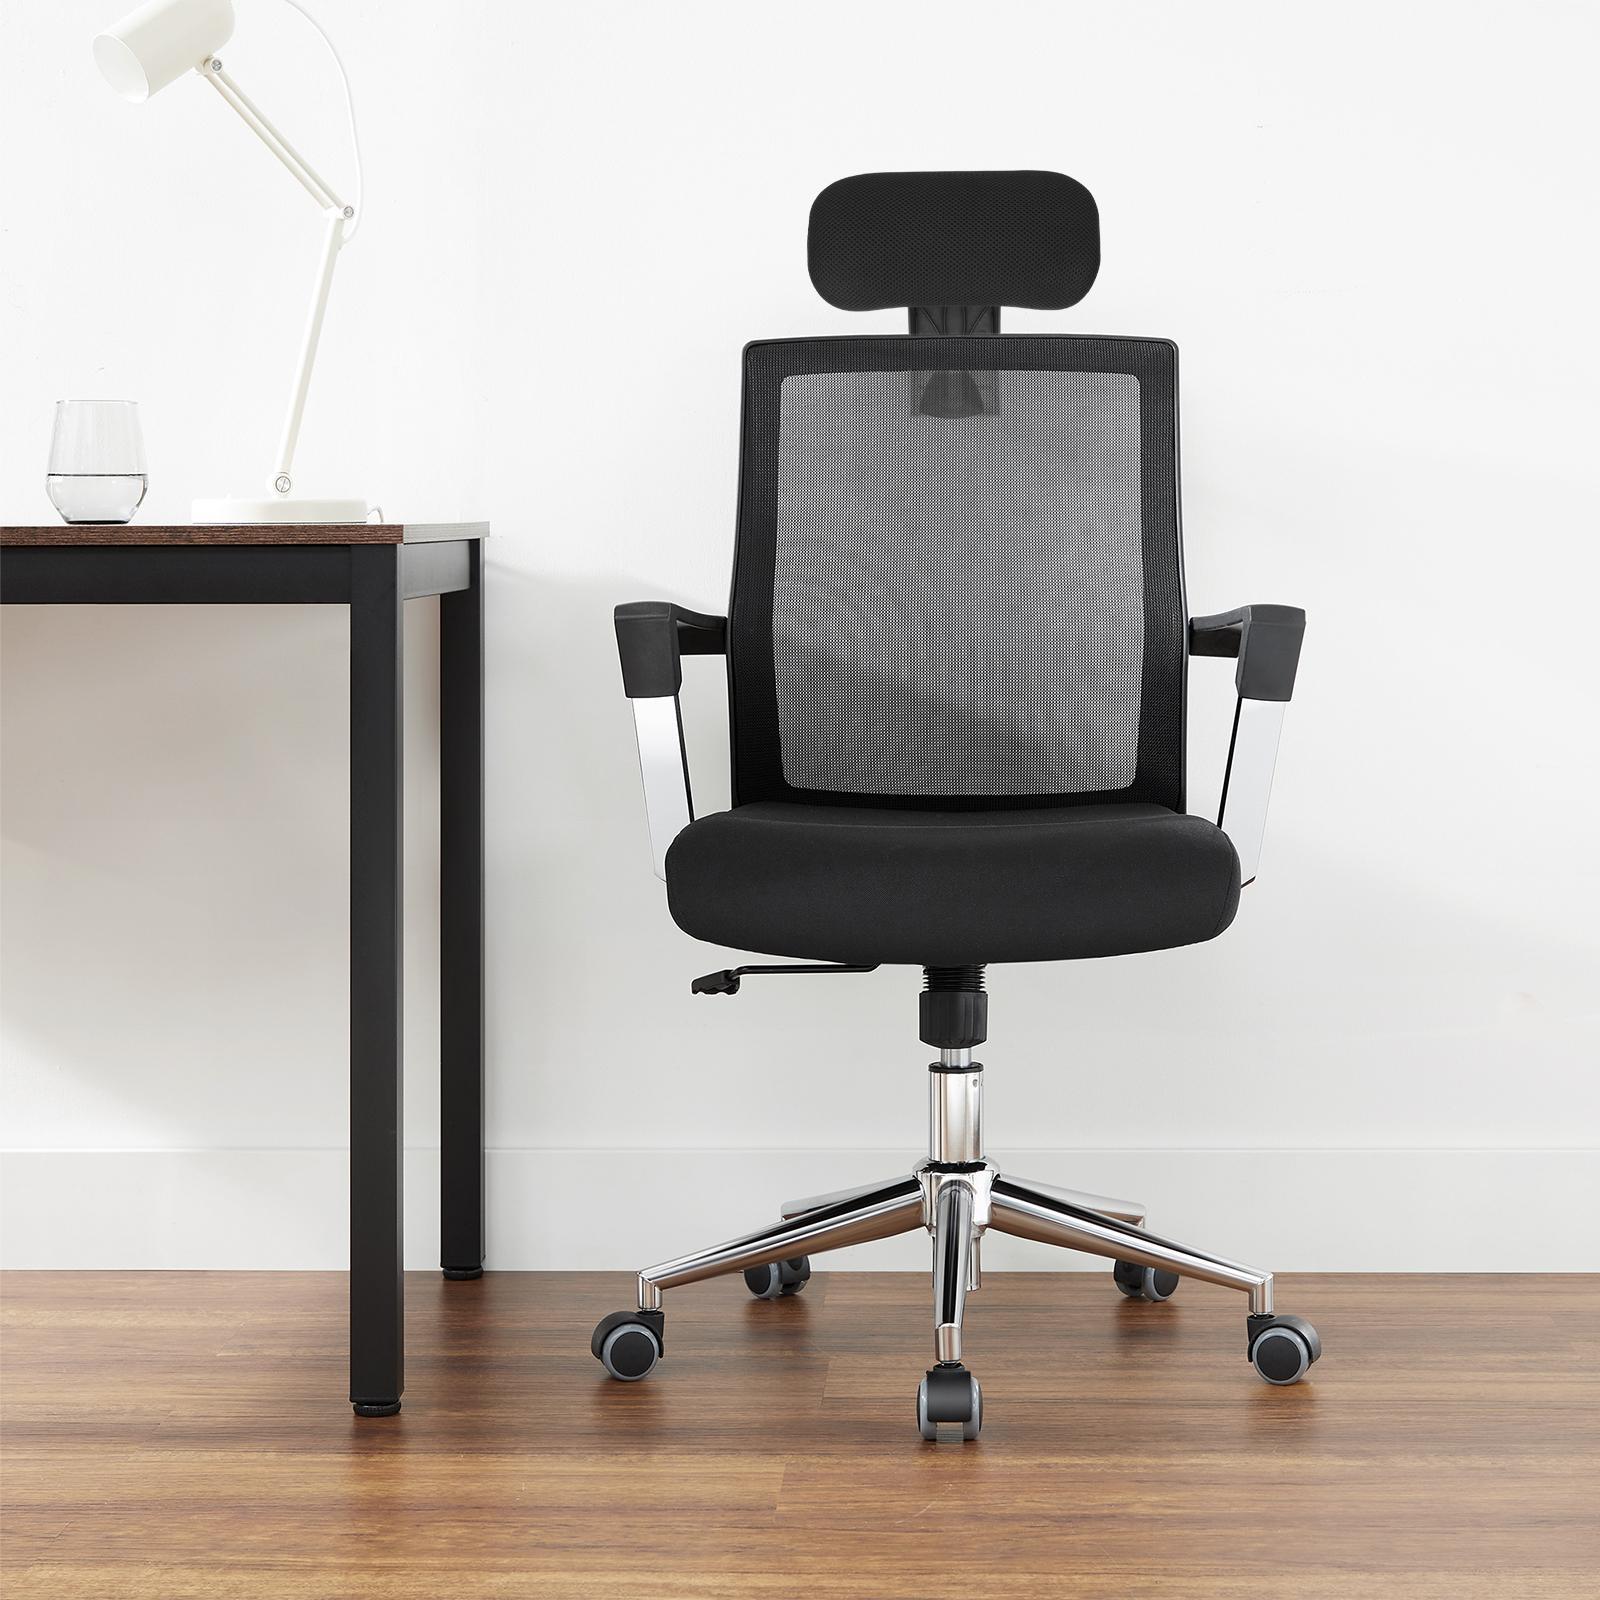 Office Chair Headrest Attachment Universal Accessories Desk